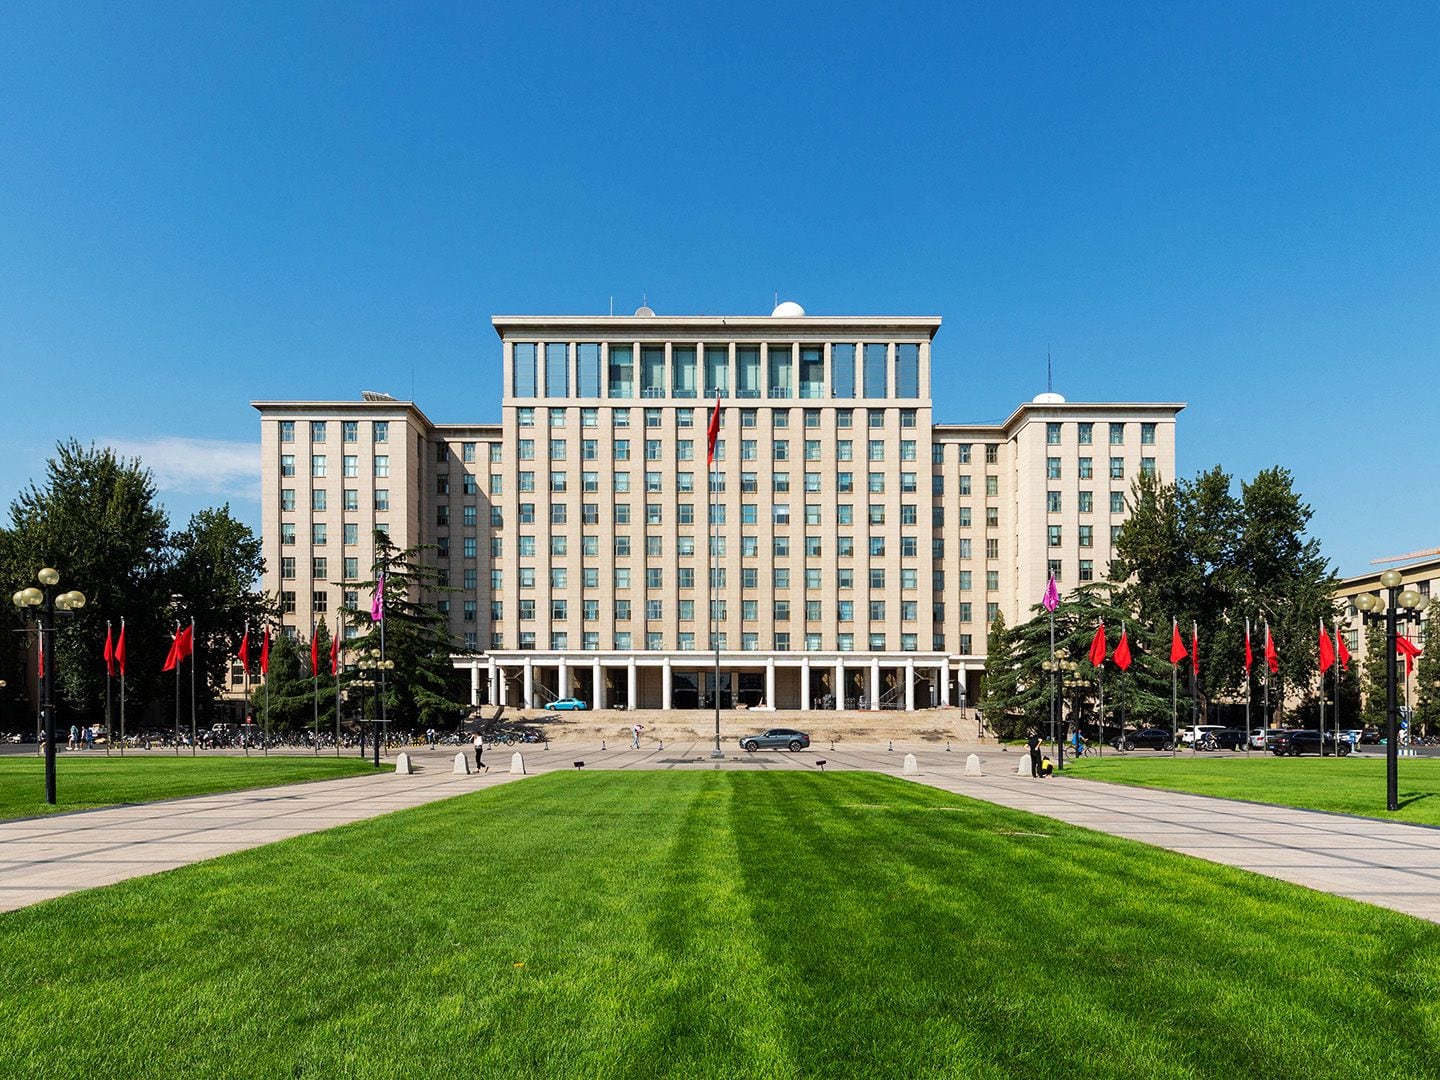 Best Universities for Blockchain 2022: Tsinghua University